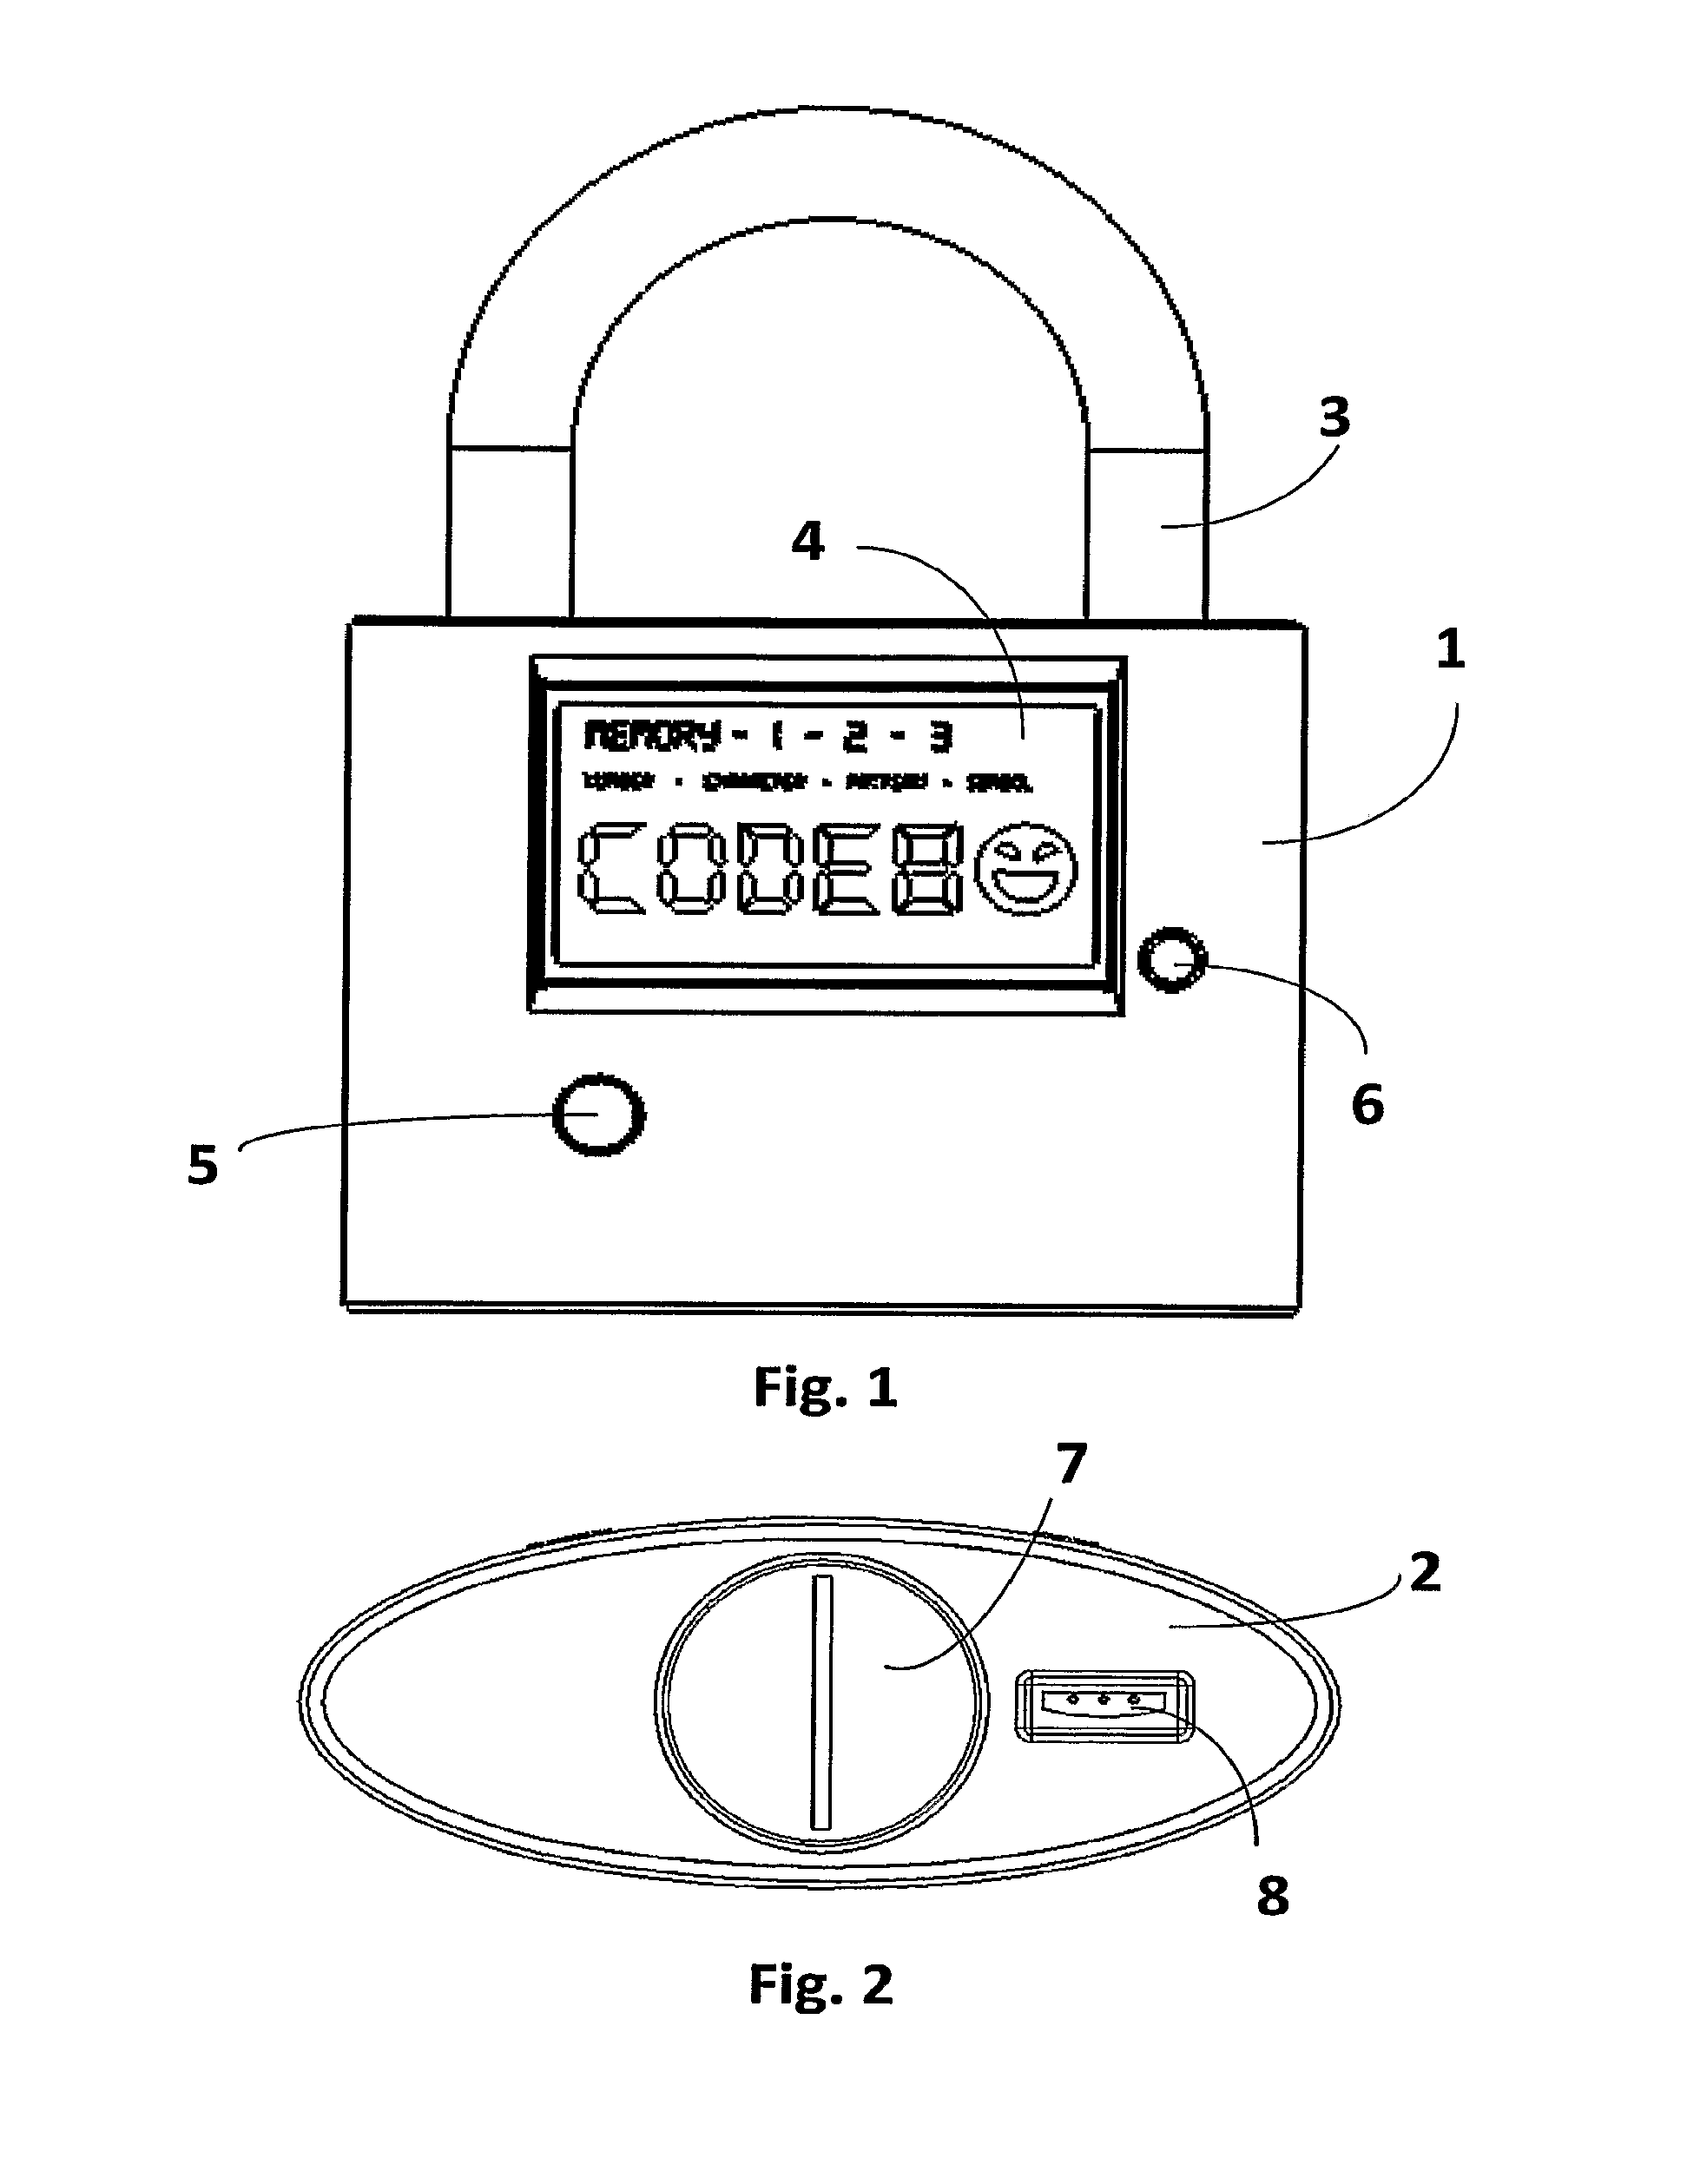 Electronic combination lock